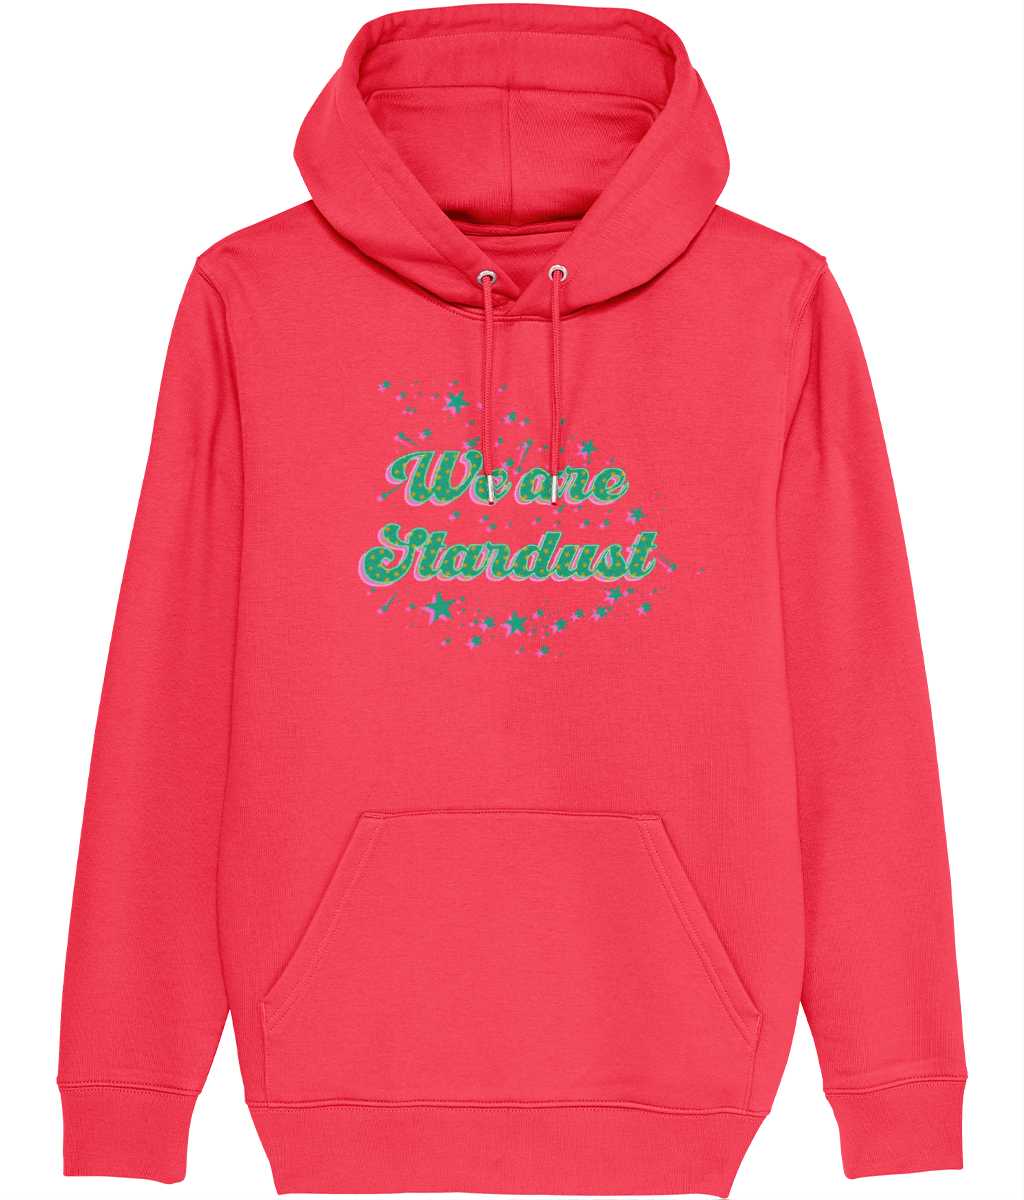 We are Stardust hoodie-Emerald print Cherchez La Femme brand